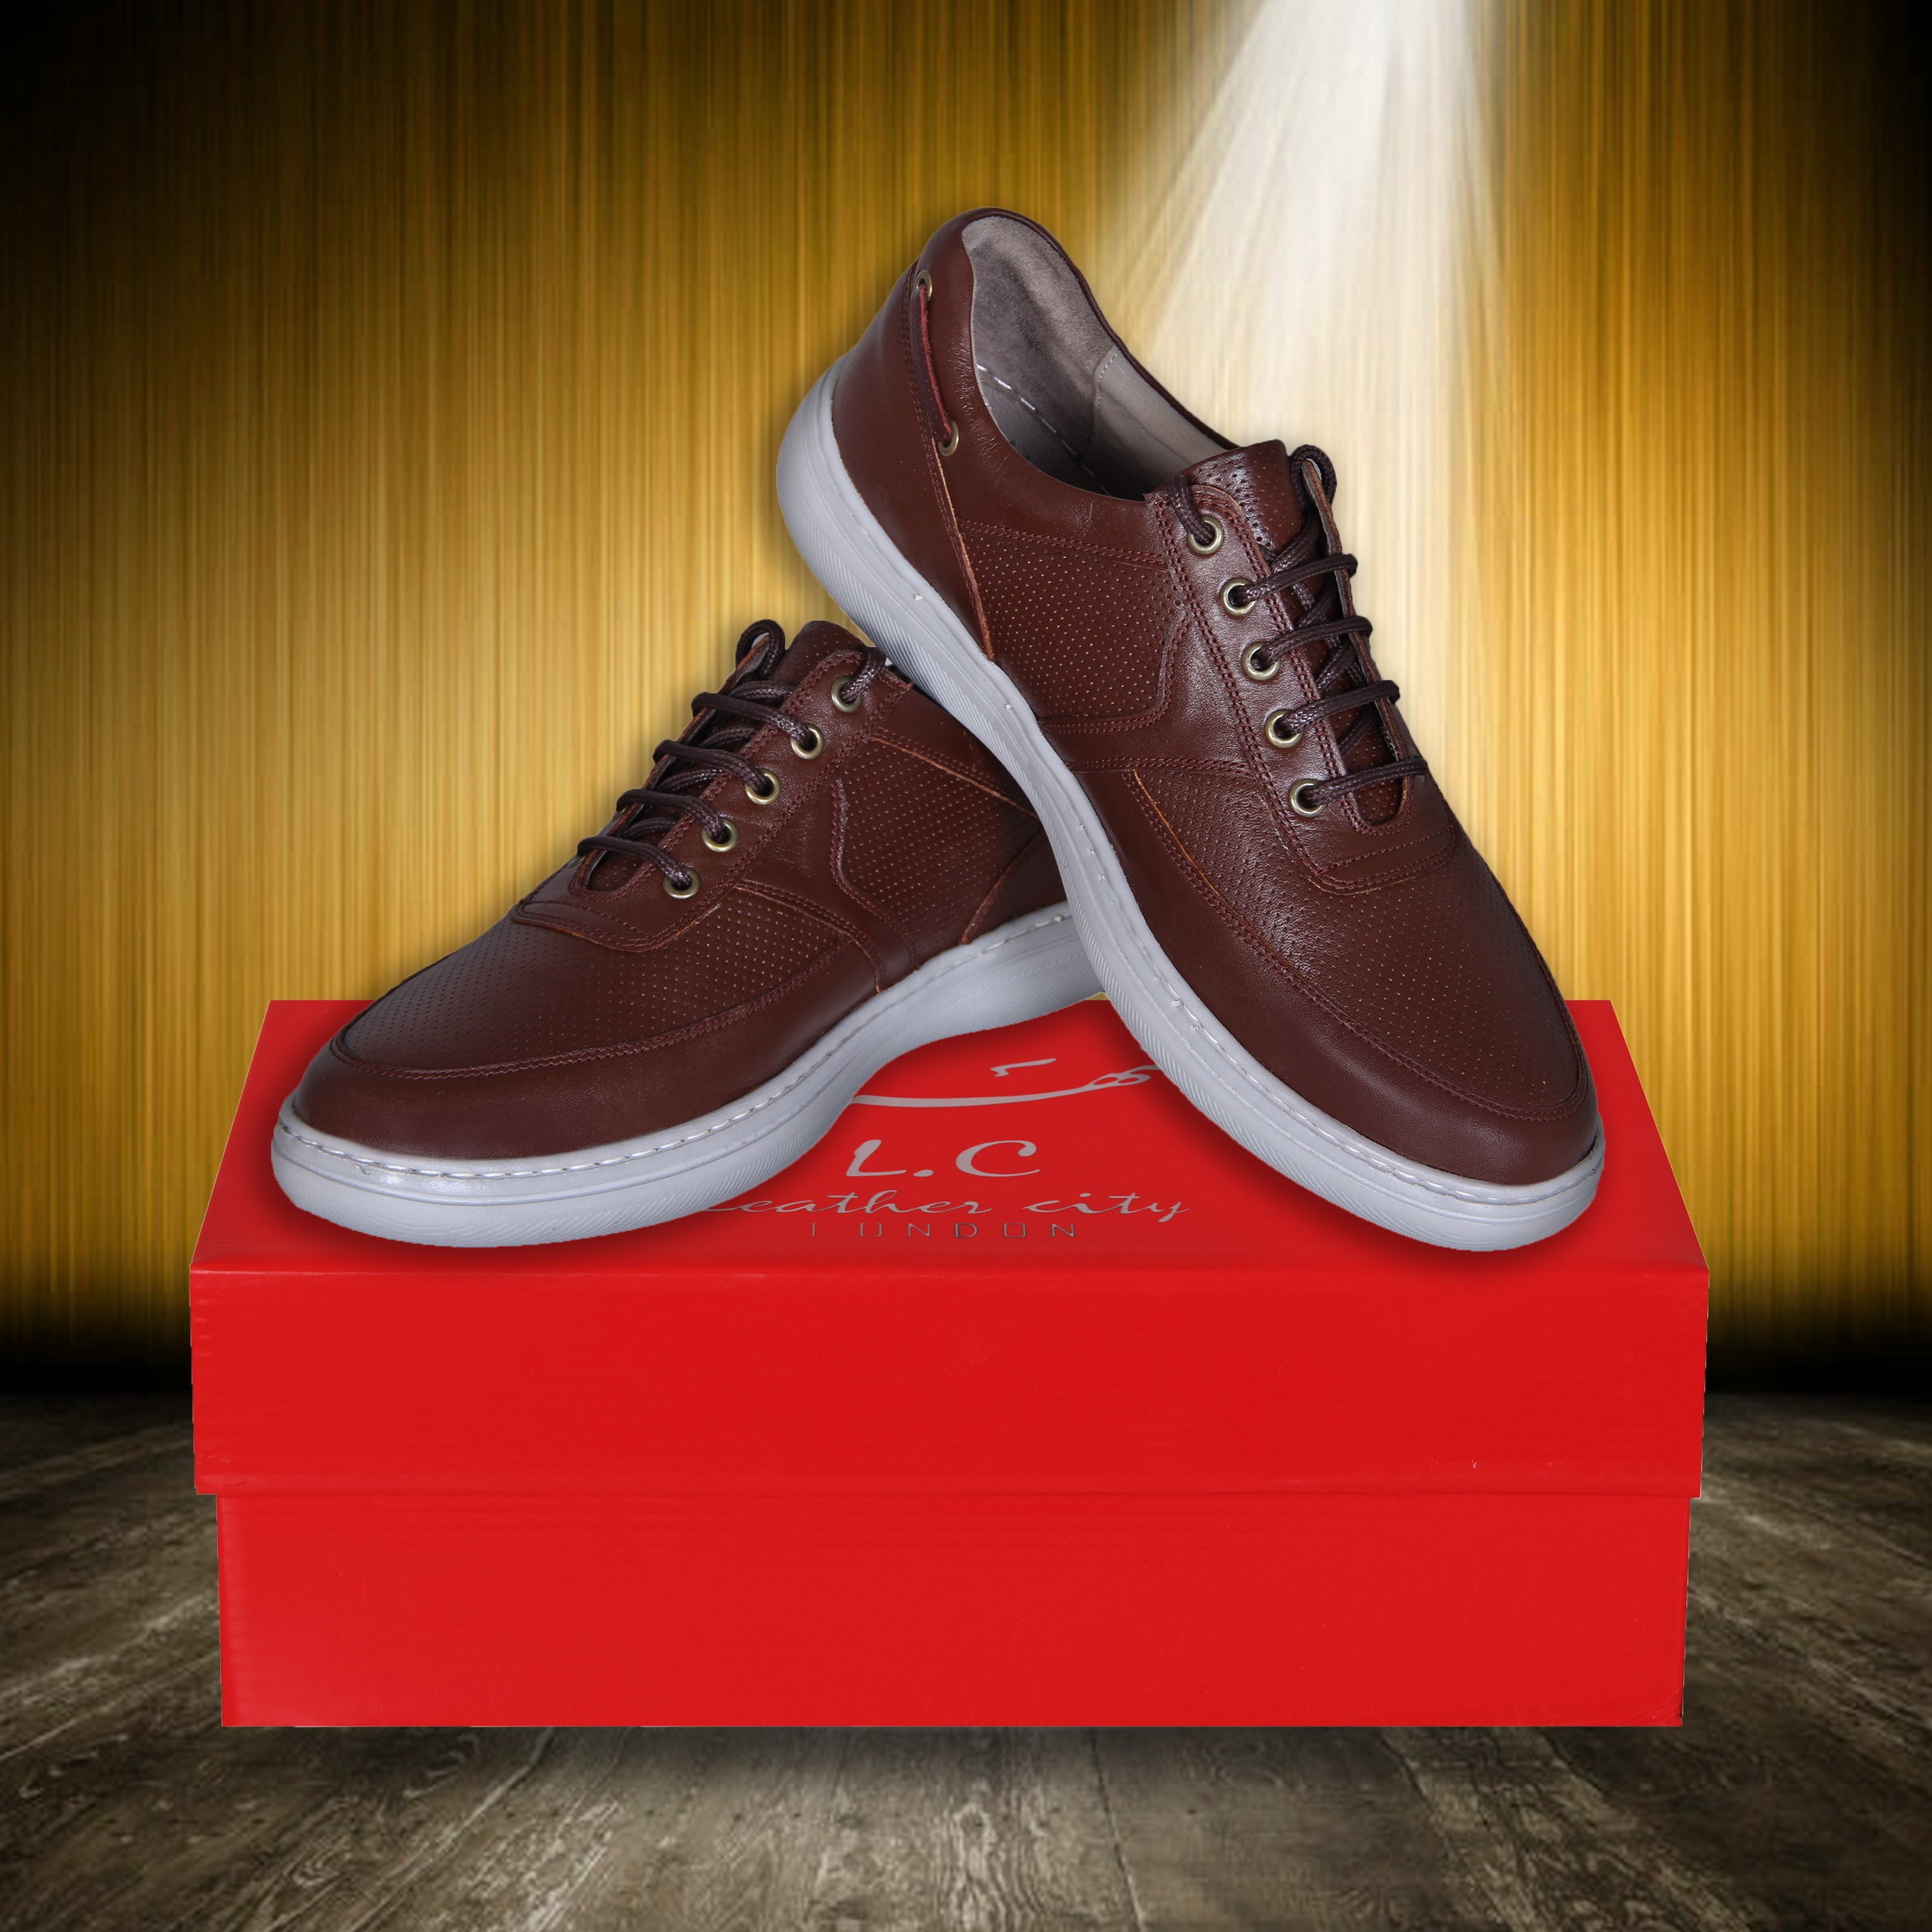 SHAHRECHARM leather men's casual shoes , F6054-3 Model